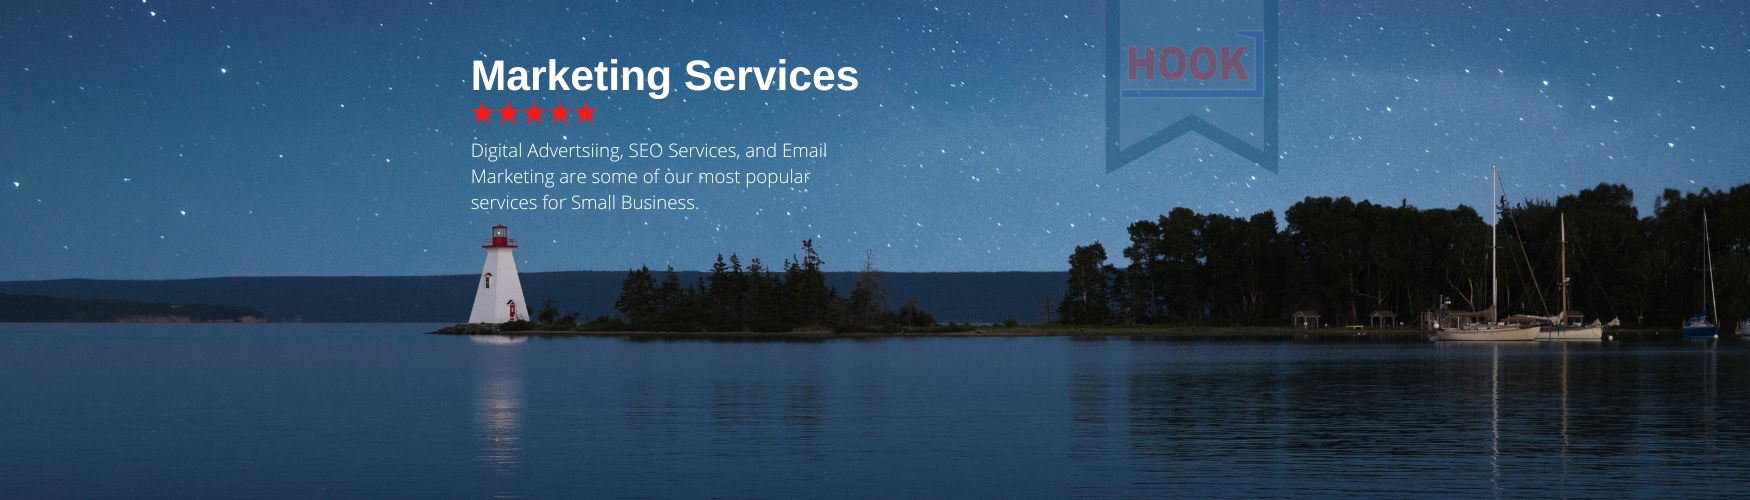 Nova Scotia Marketing Services Banner